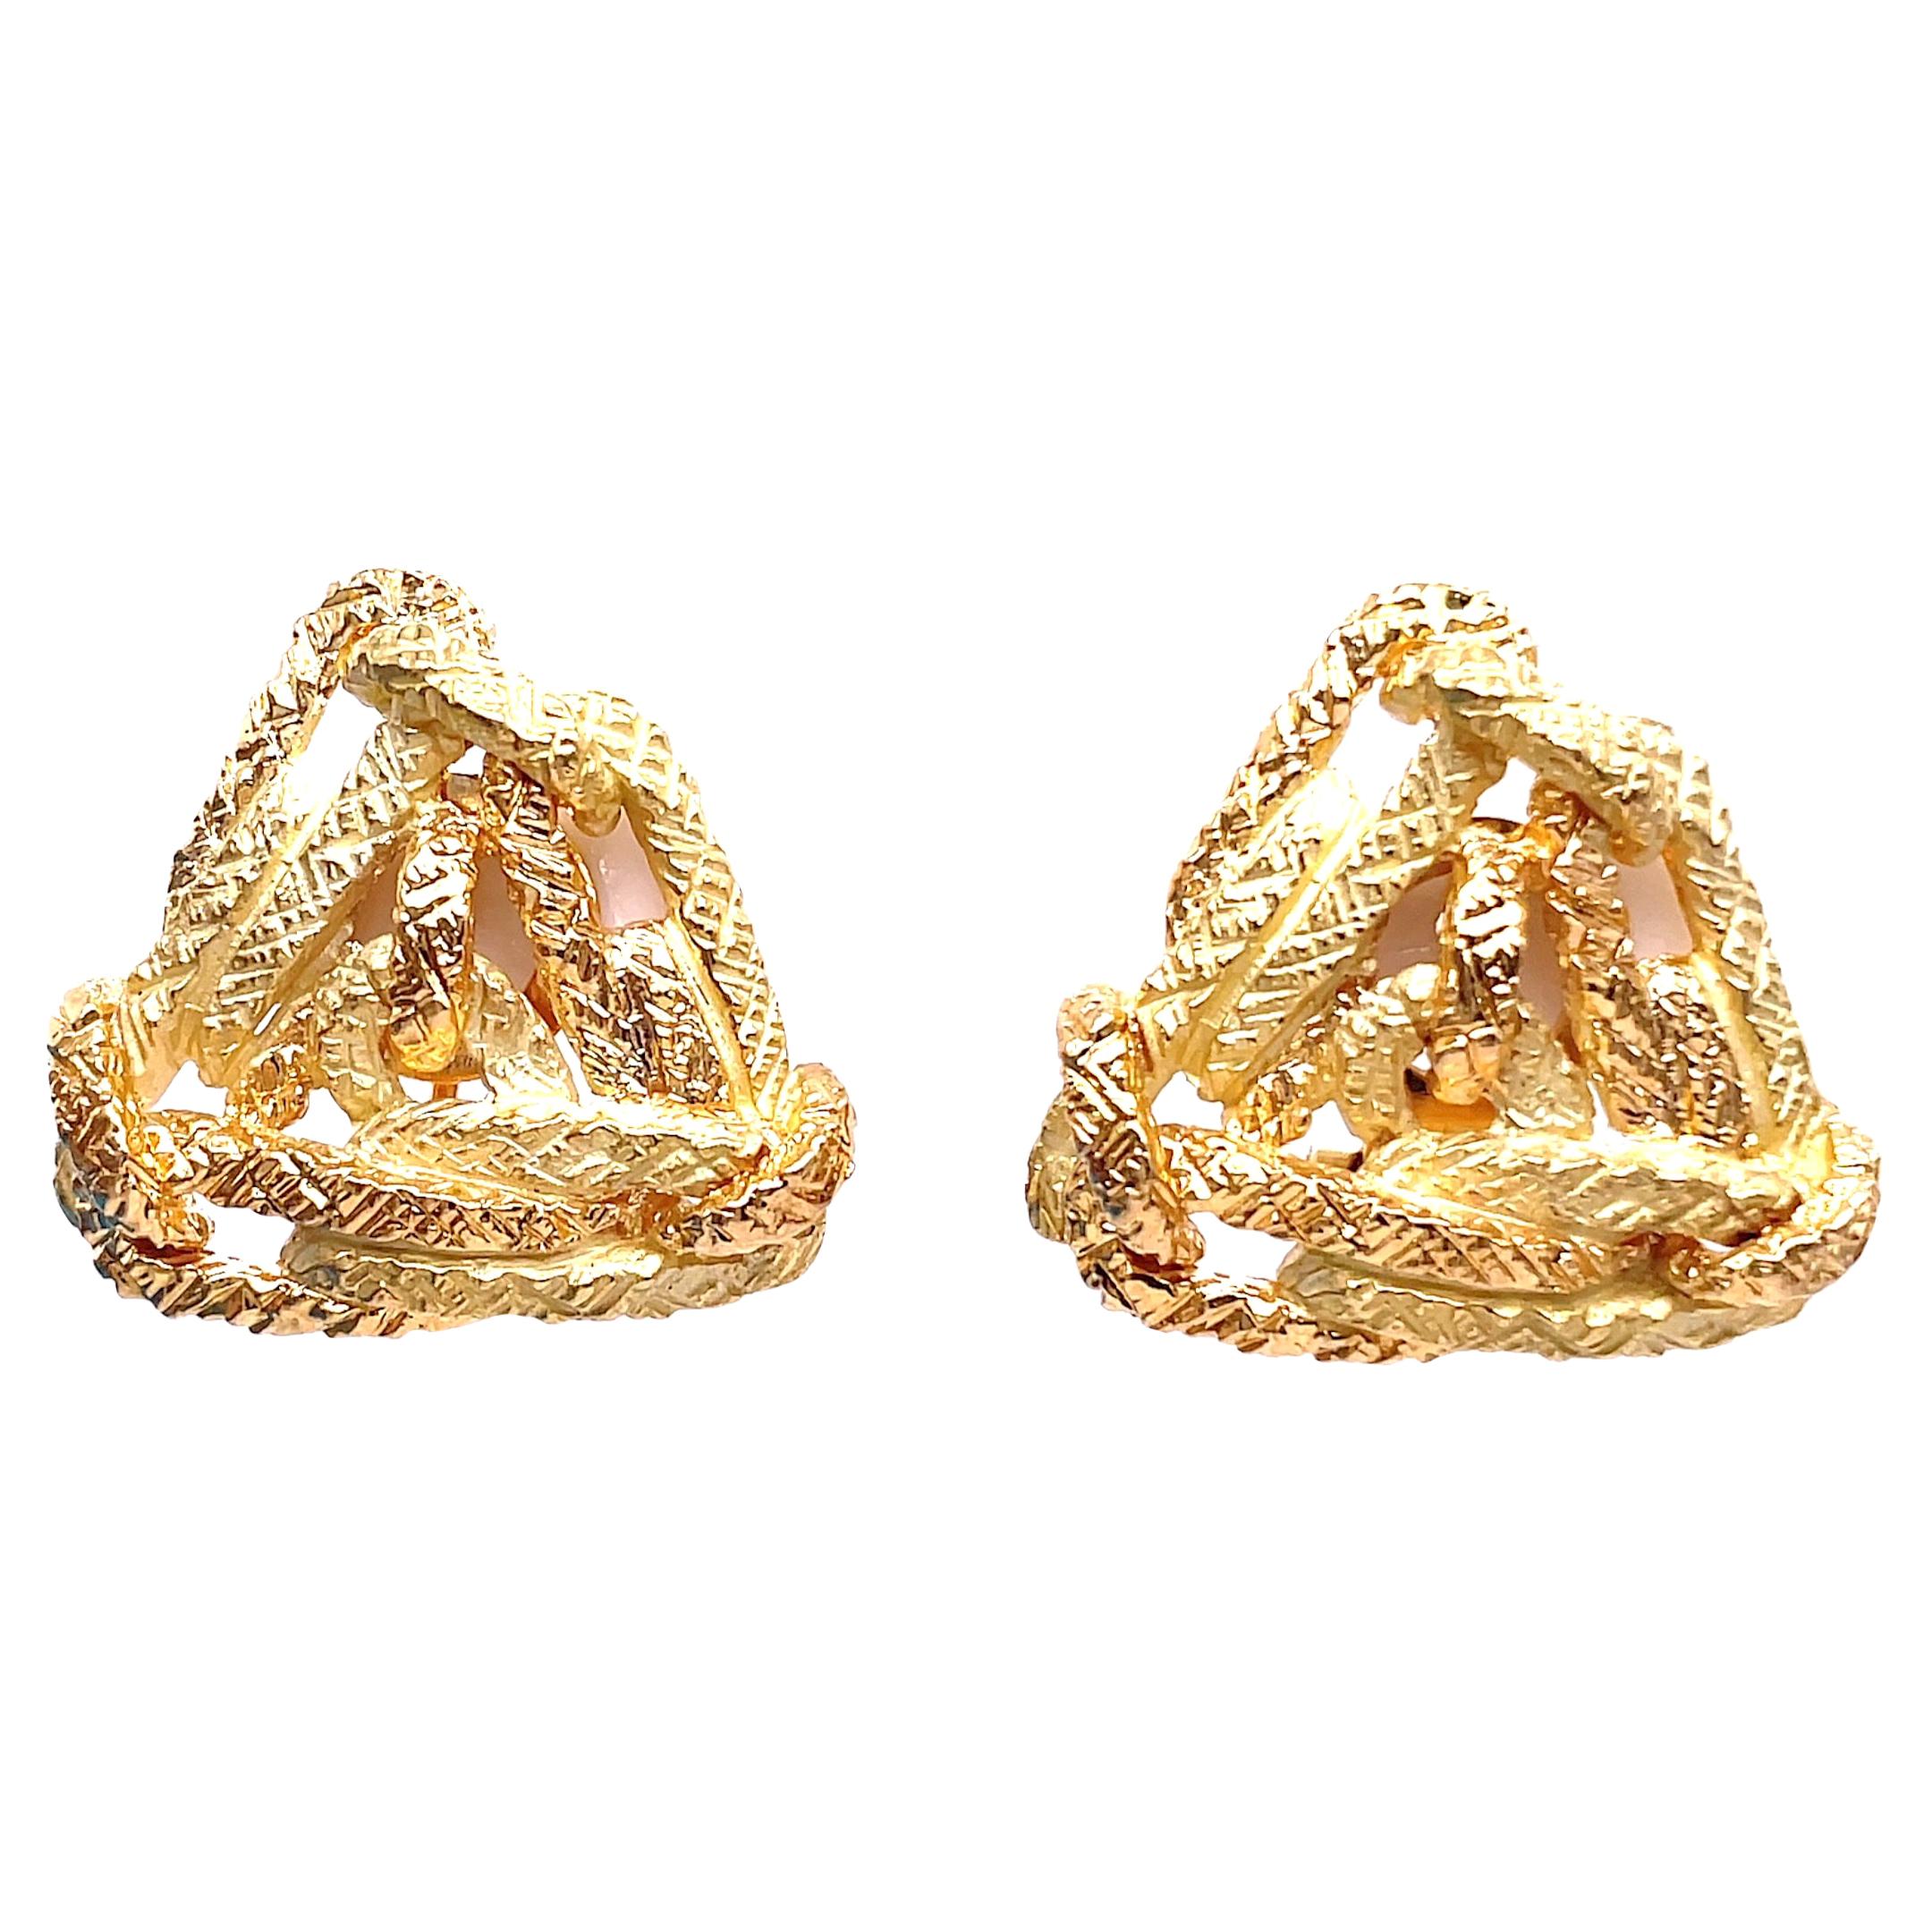 Vintage French 18 Karat Gold Earrings